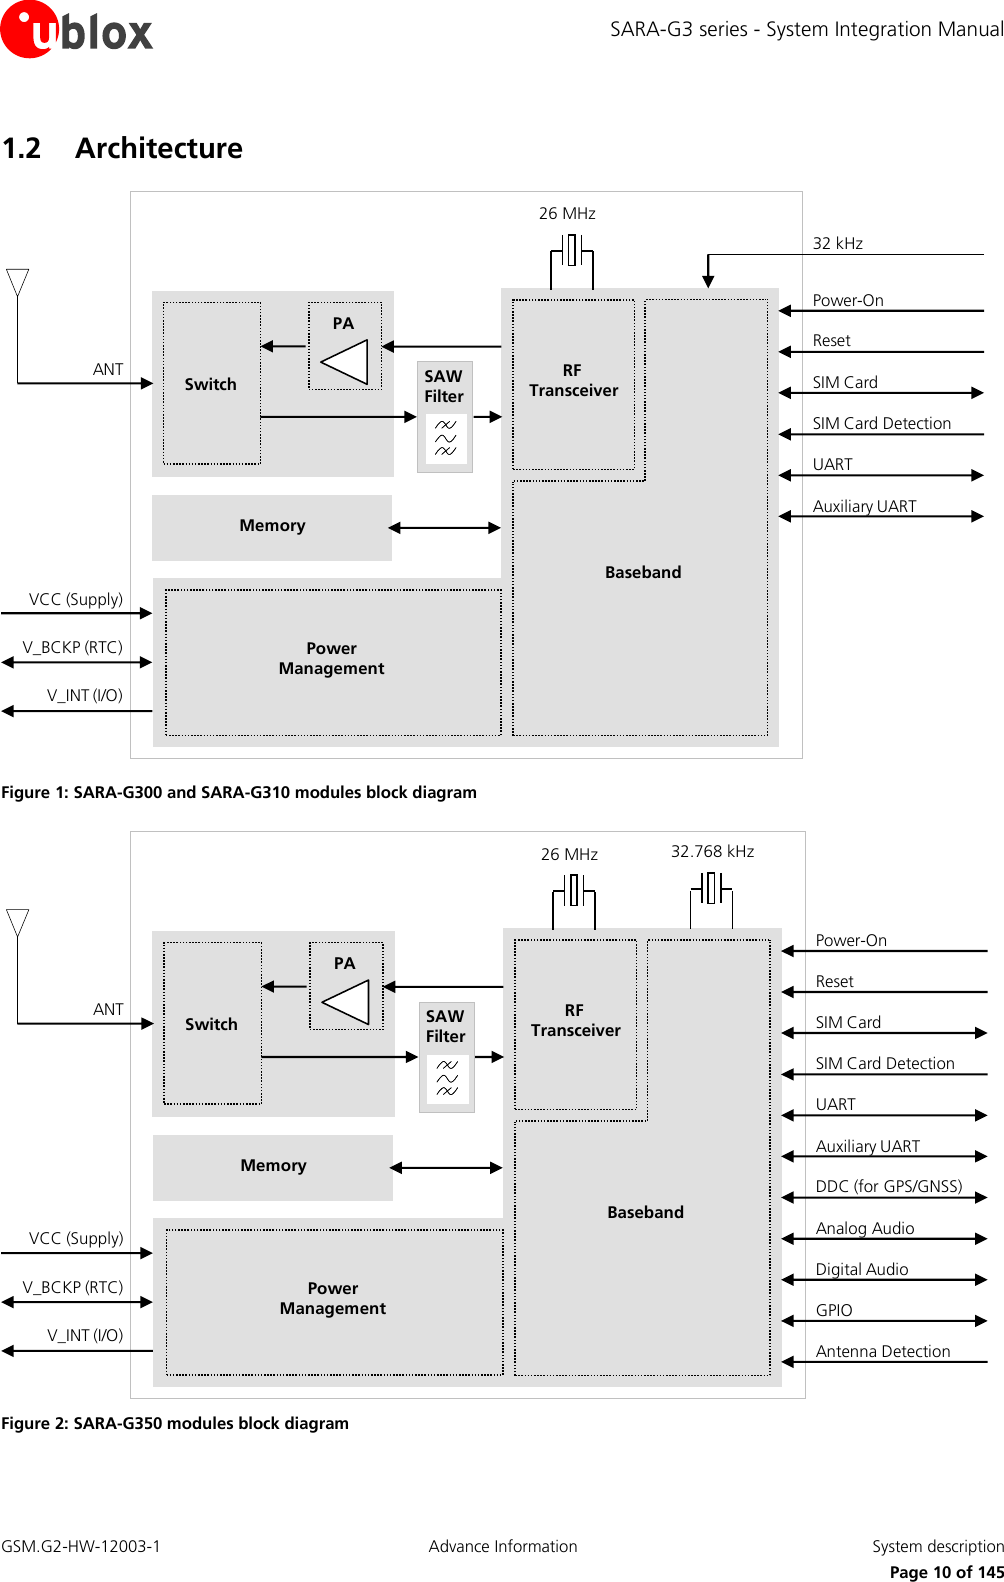 SARA-G3 series - System Integration Manual GSM.G2-HW-12003-1  Advance Information  System description     Page 10 of 145 1.2 Architecture MemoryAuxiliary UARTSIM Card DetectionSIM CardUARTV_BCKP (RTC)V_INT (I/O)Power-OnReset26 MHzRF TransceiverPowerManagementBasebandANT SAWFilterSwitchPAVCC (Supply)32 kHz Figure 1: SARA-G300 and SARA-G310 modules block diagram MemoryAuxiliary UARTDDC (for GPS/GNSS)SIM Card DetectionSIM CardUARTV_BCKP (RTC)V_INT (I/O)Power-OnReset26 MHz 32.768 kHzRF TransceiverPowerManagementBasebandANT SAWFilterSwitchPADigital AudioAnalog AudioVCC (Supply)GPIOAntenna Detection Figure 2: SARA-G350 modules block diagram  